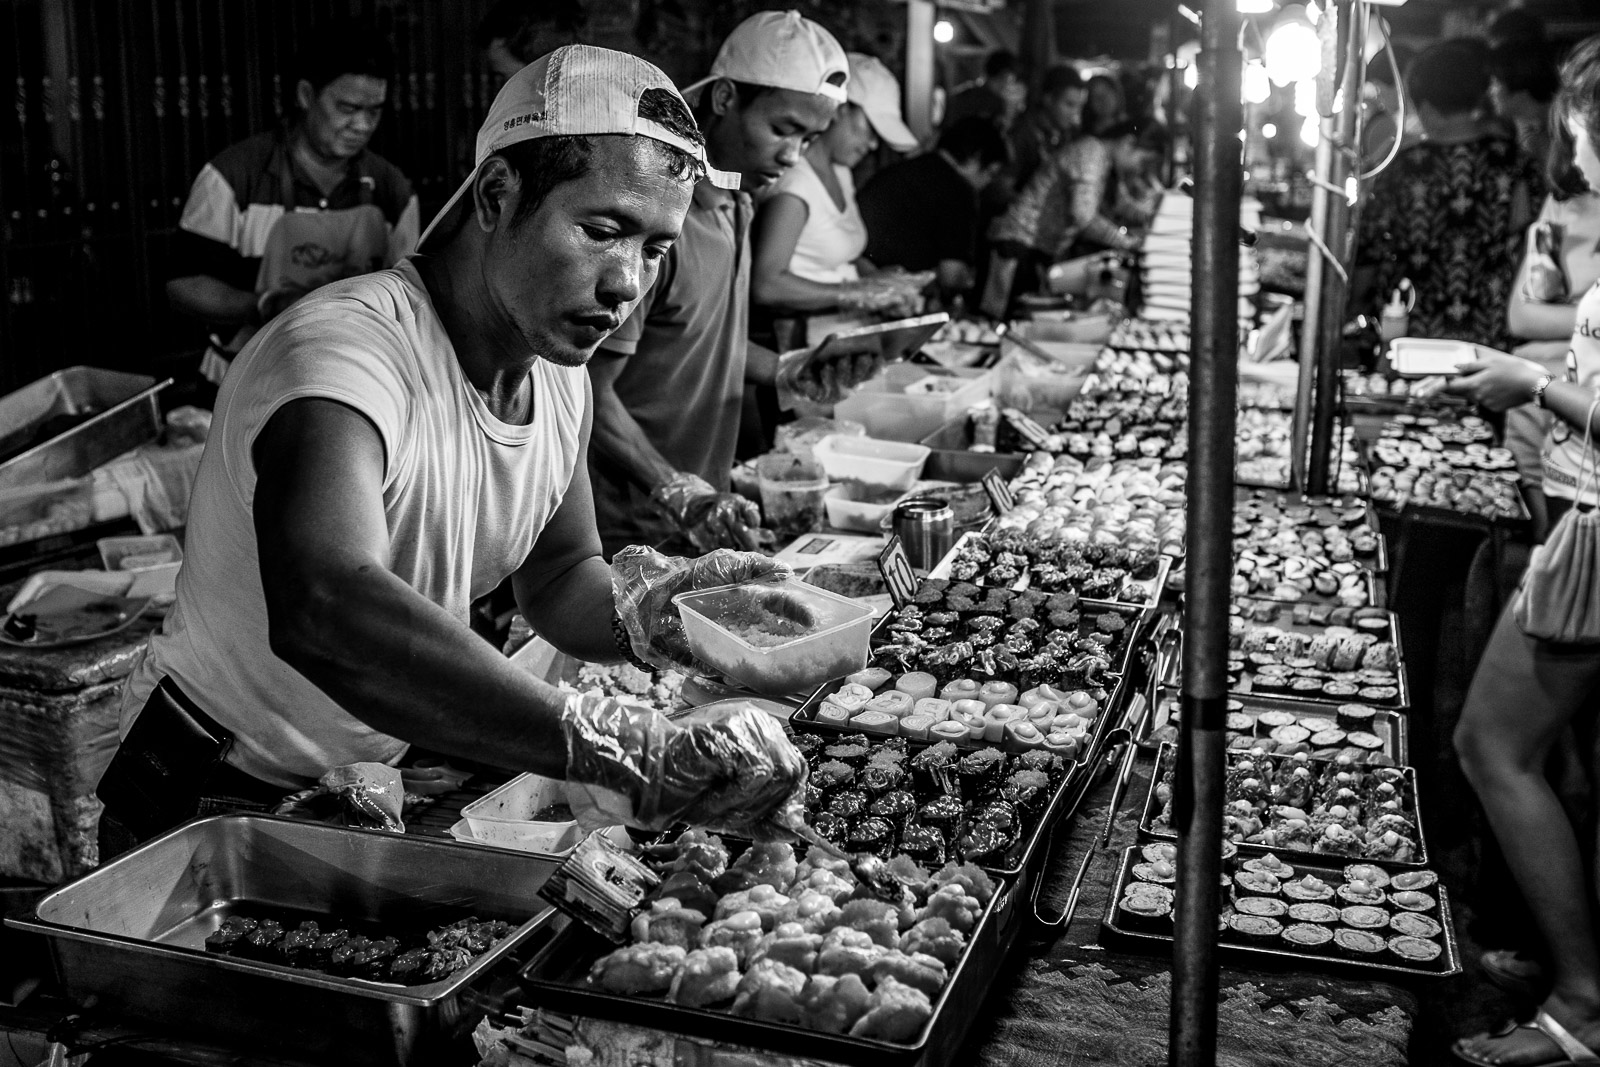 Saturday Night Market, Chiang Mai